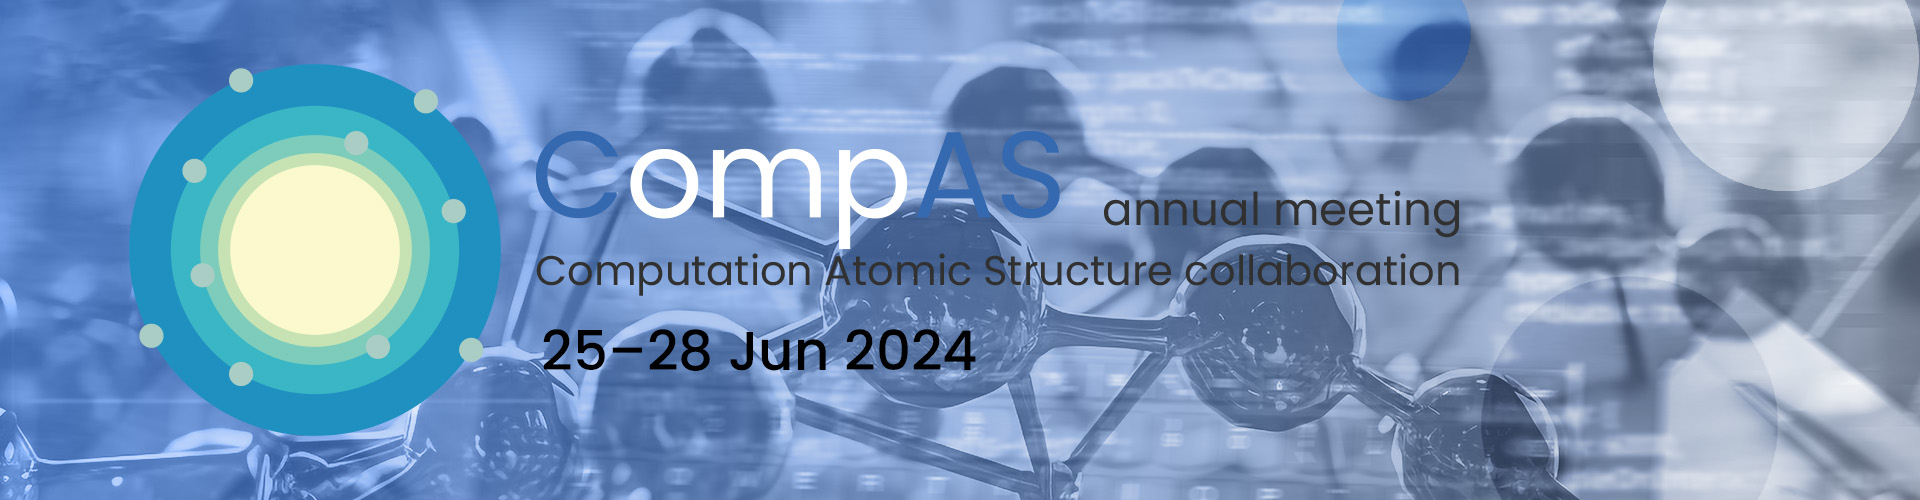 CompAS - Computational Atomic Structure group meeting